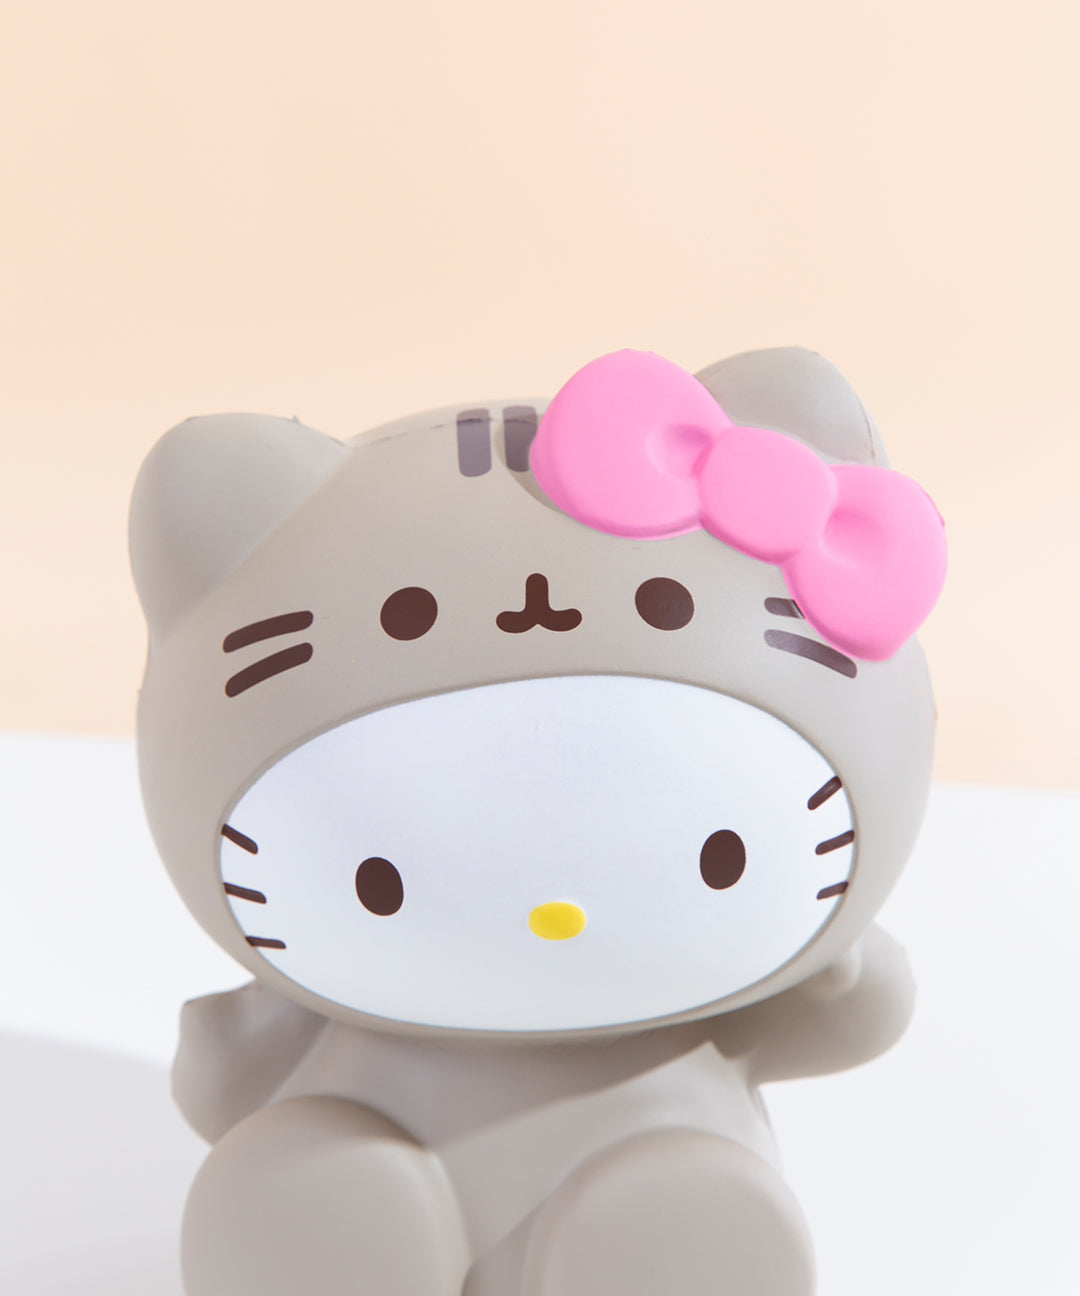 Hello Kitty x Pusheen Jumbo Squishy !!! FOUND IN NYC - Mini-So : r